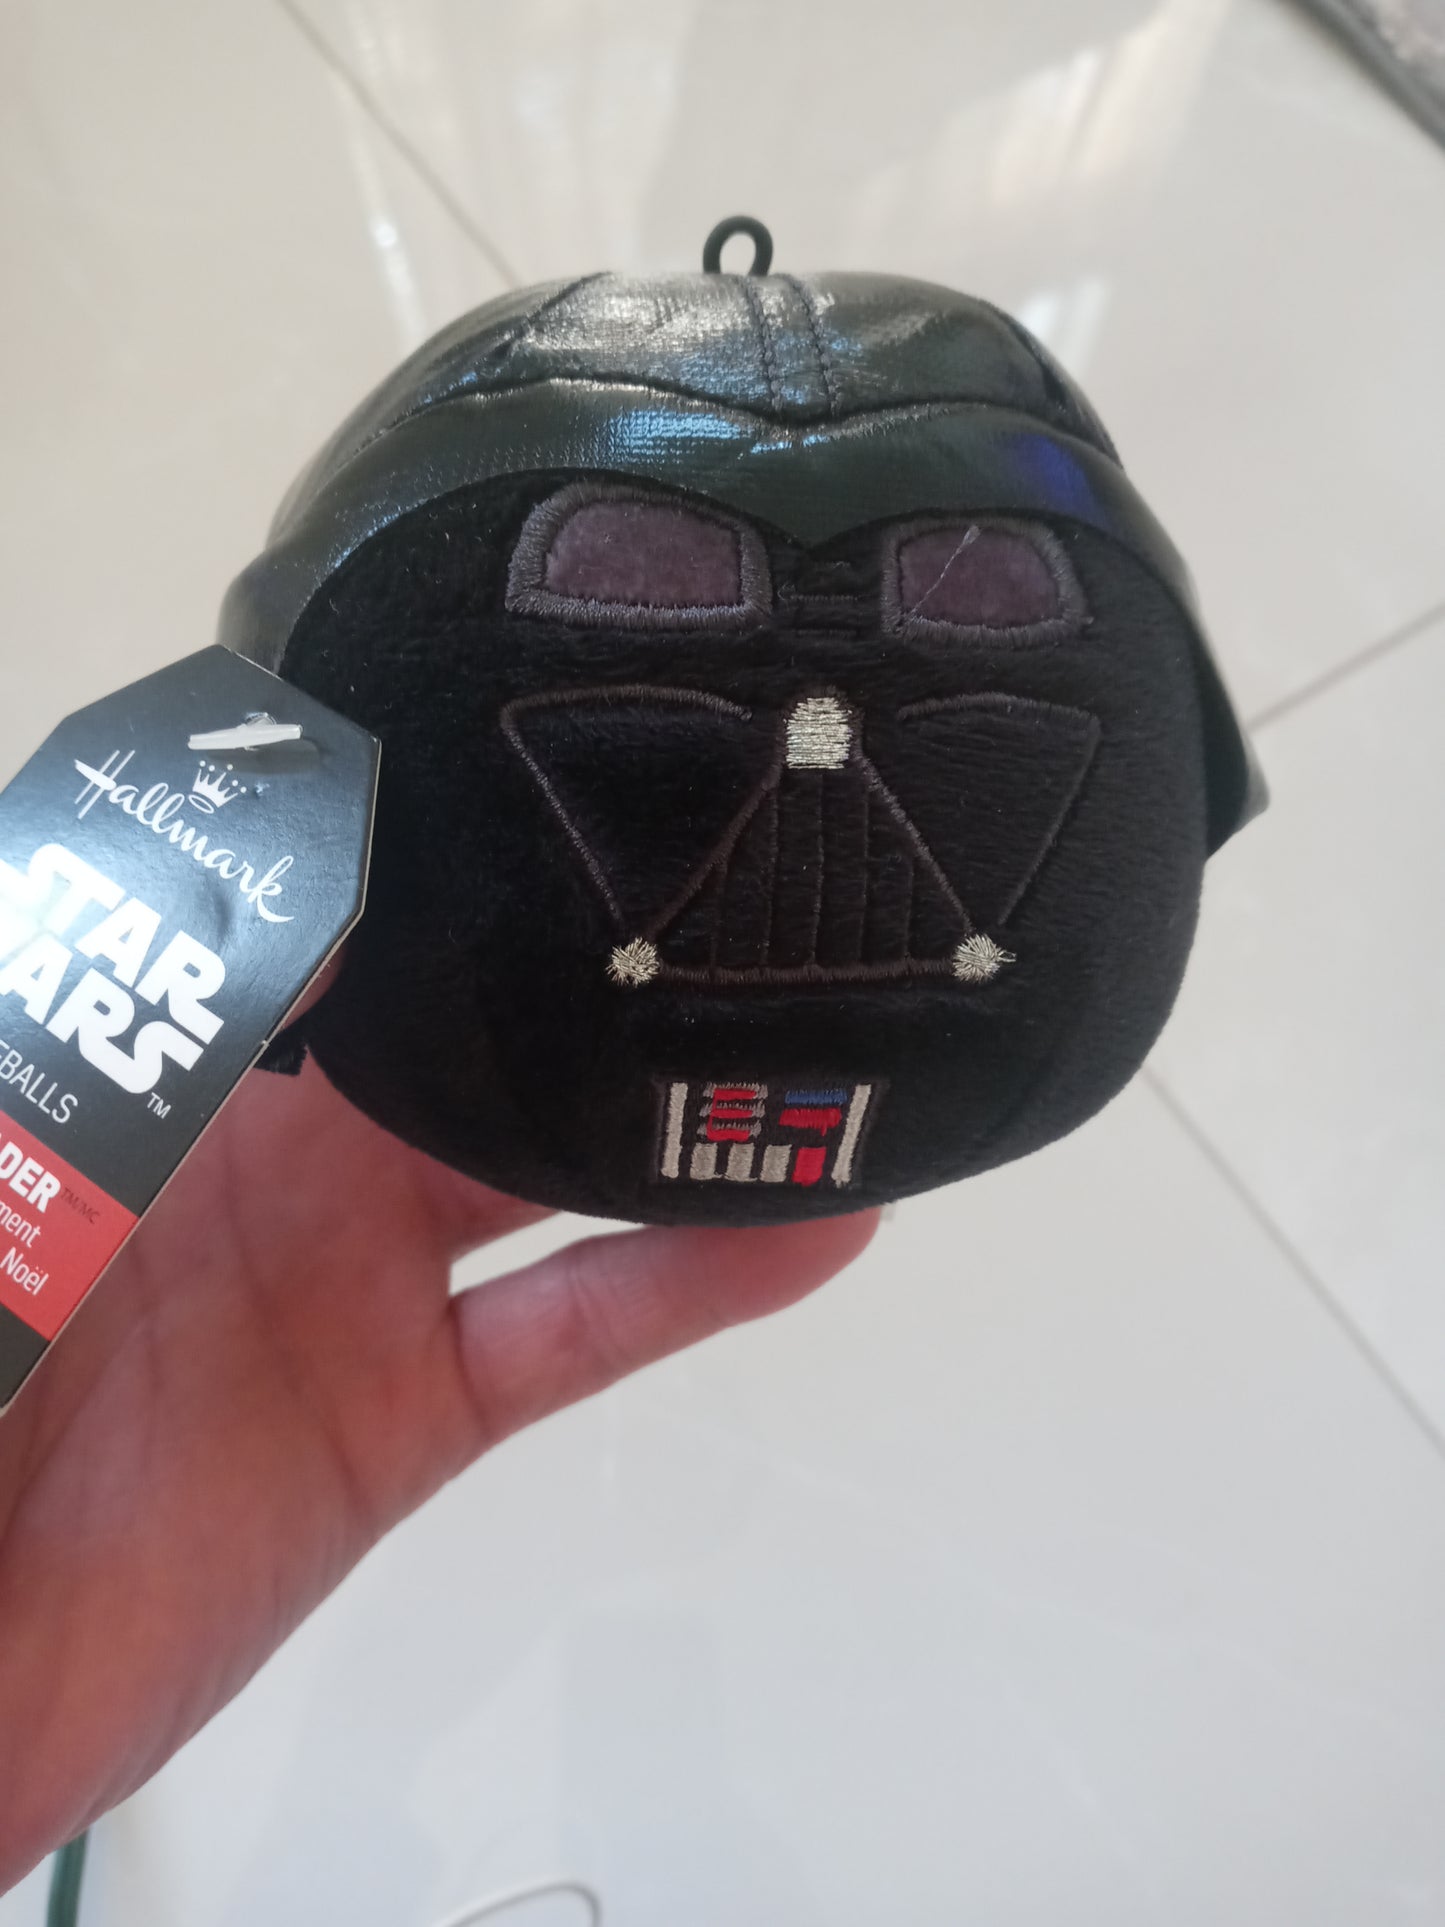 Hallmark Plush Toy Stuffed Animal, toy Star Wars Puffball, Darth Vader